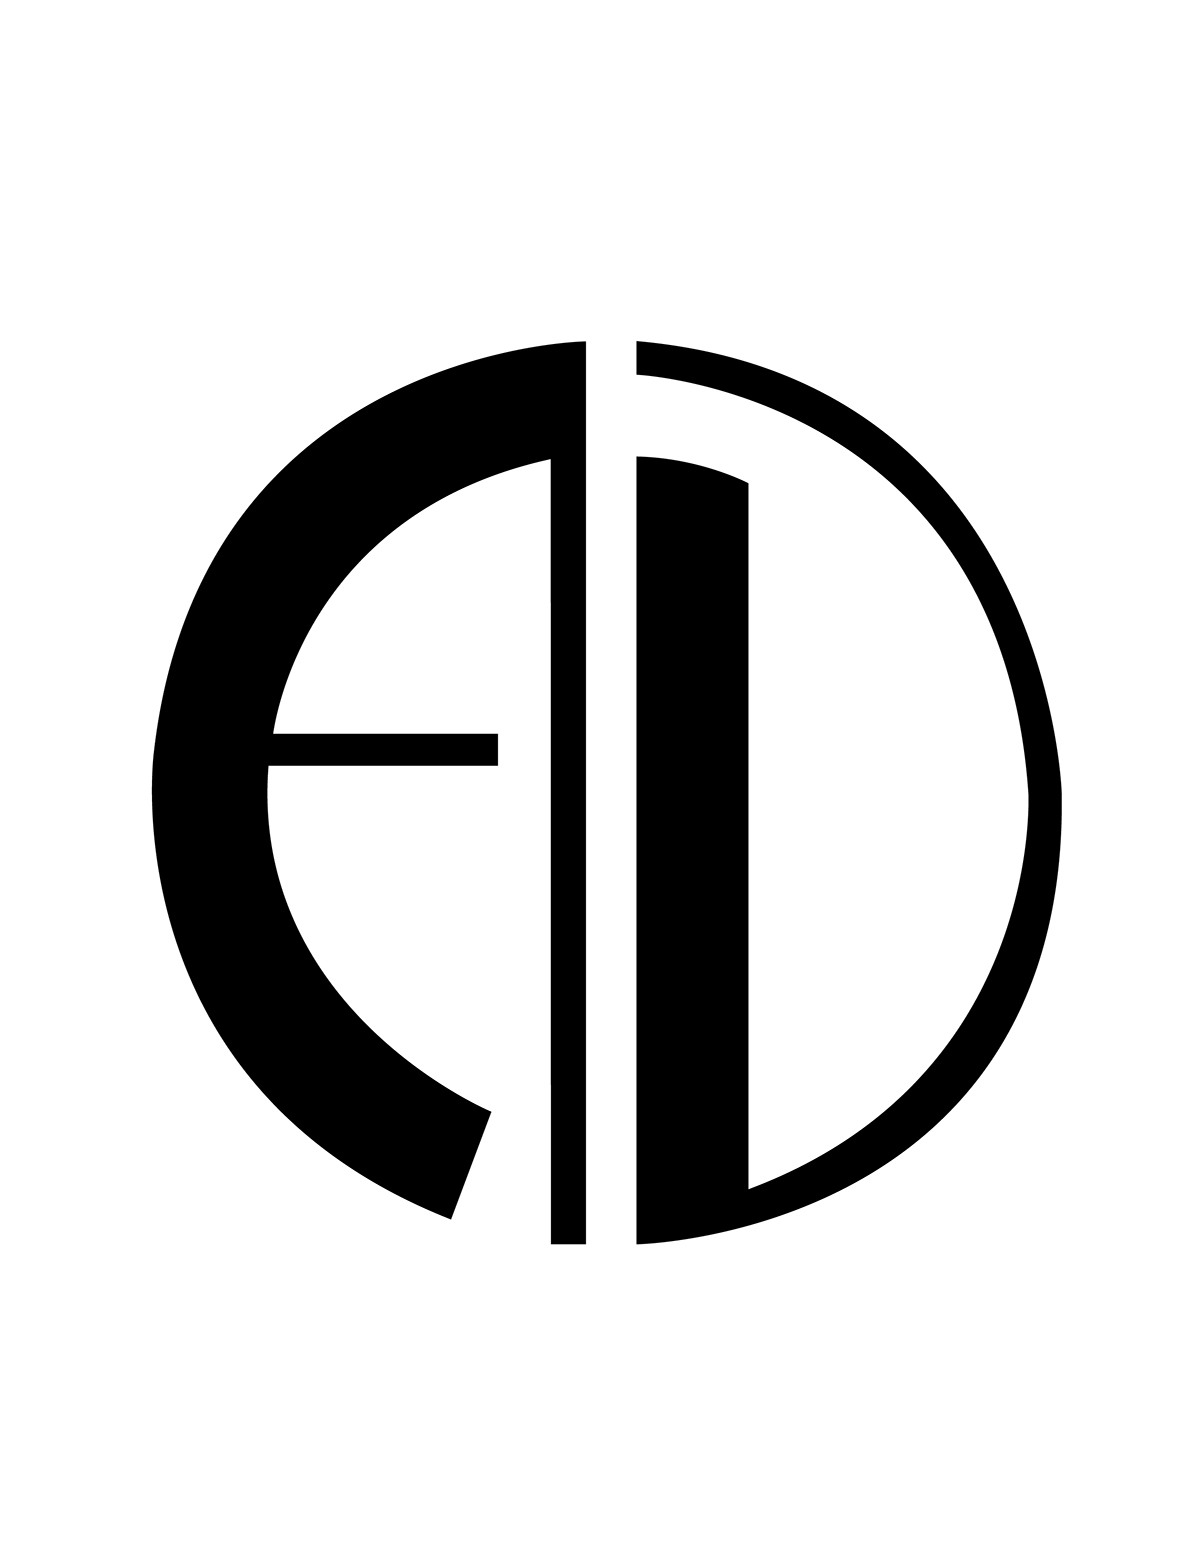 Logotype logos letter integration